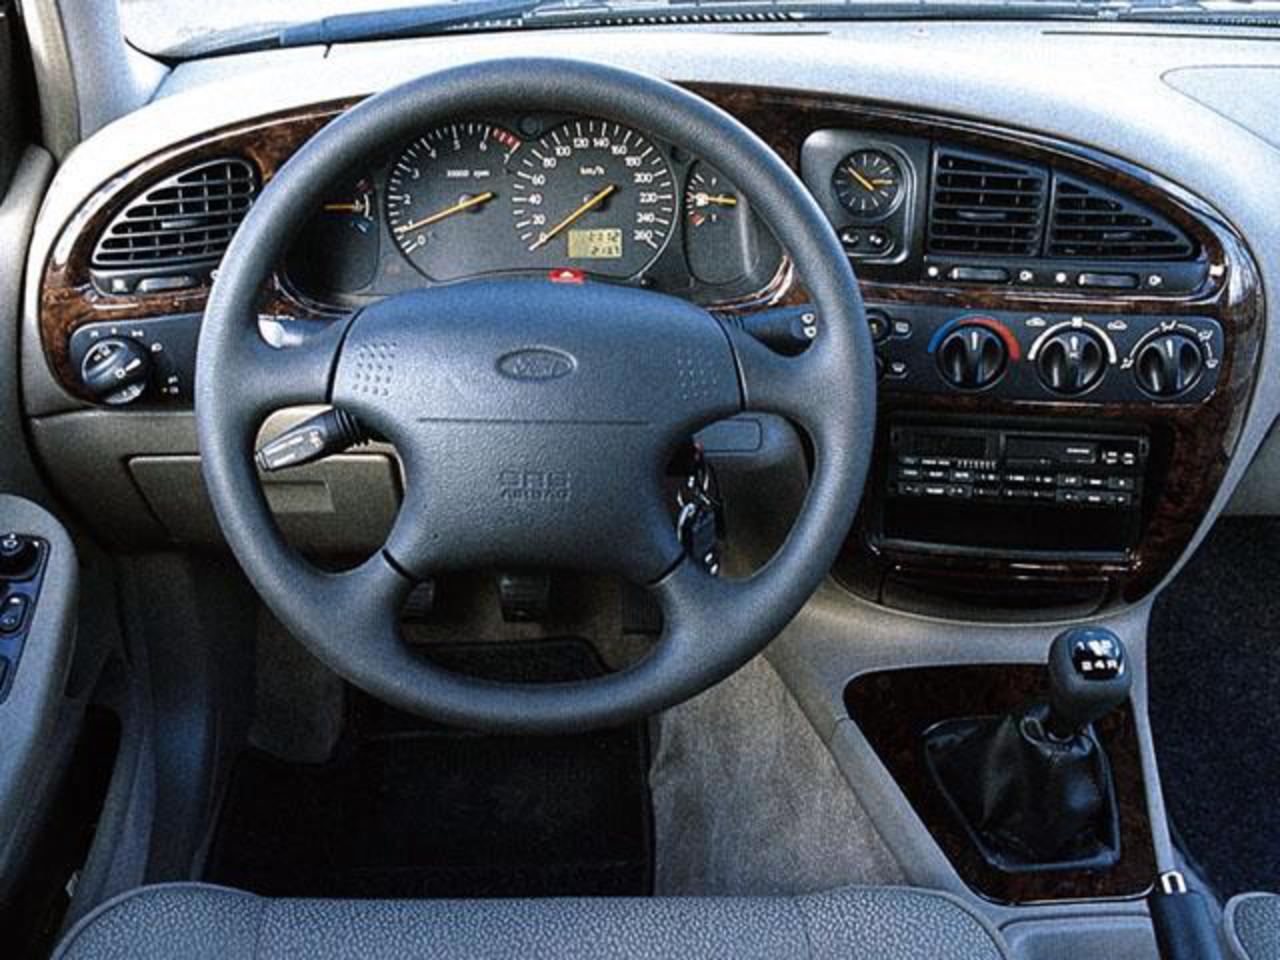 Ford Scorpio (Форд Скорпио) - Продажа, Цены, Отзывы, Фото ...